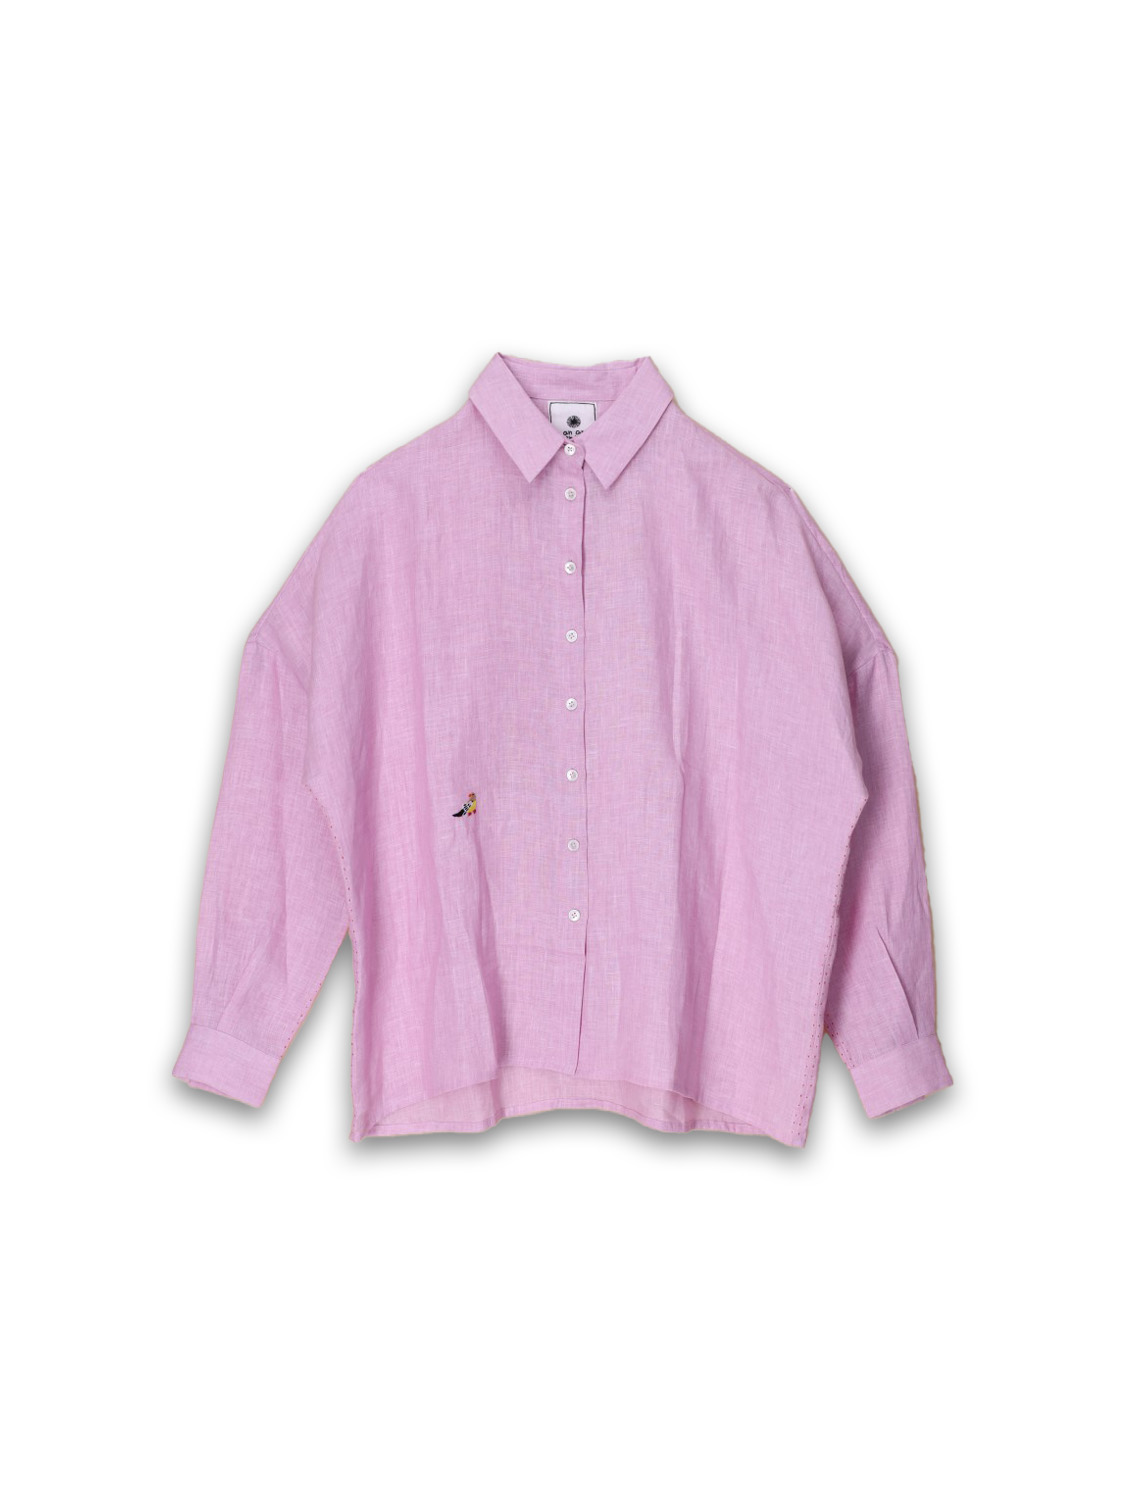 an an londree Summer – Leinen-Bluse mit verspielten Details   rosa S